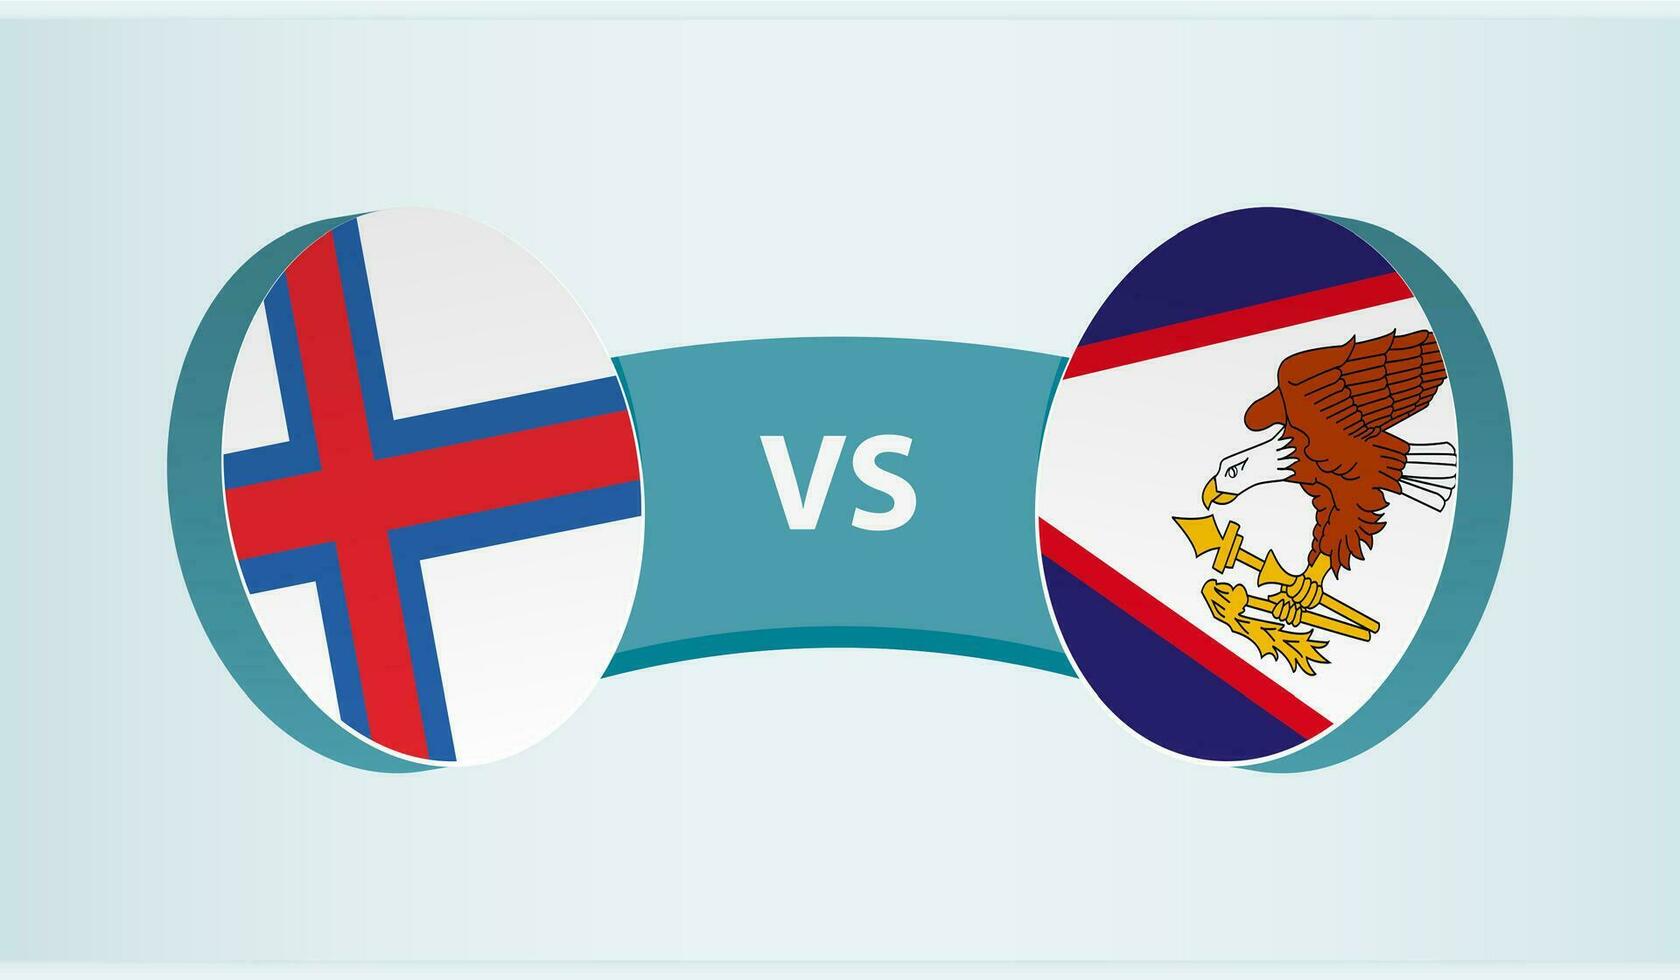 Faroe Islands versus American Samoa, team sports competition concept. vector